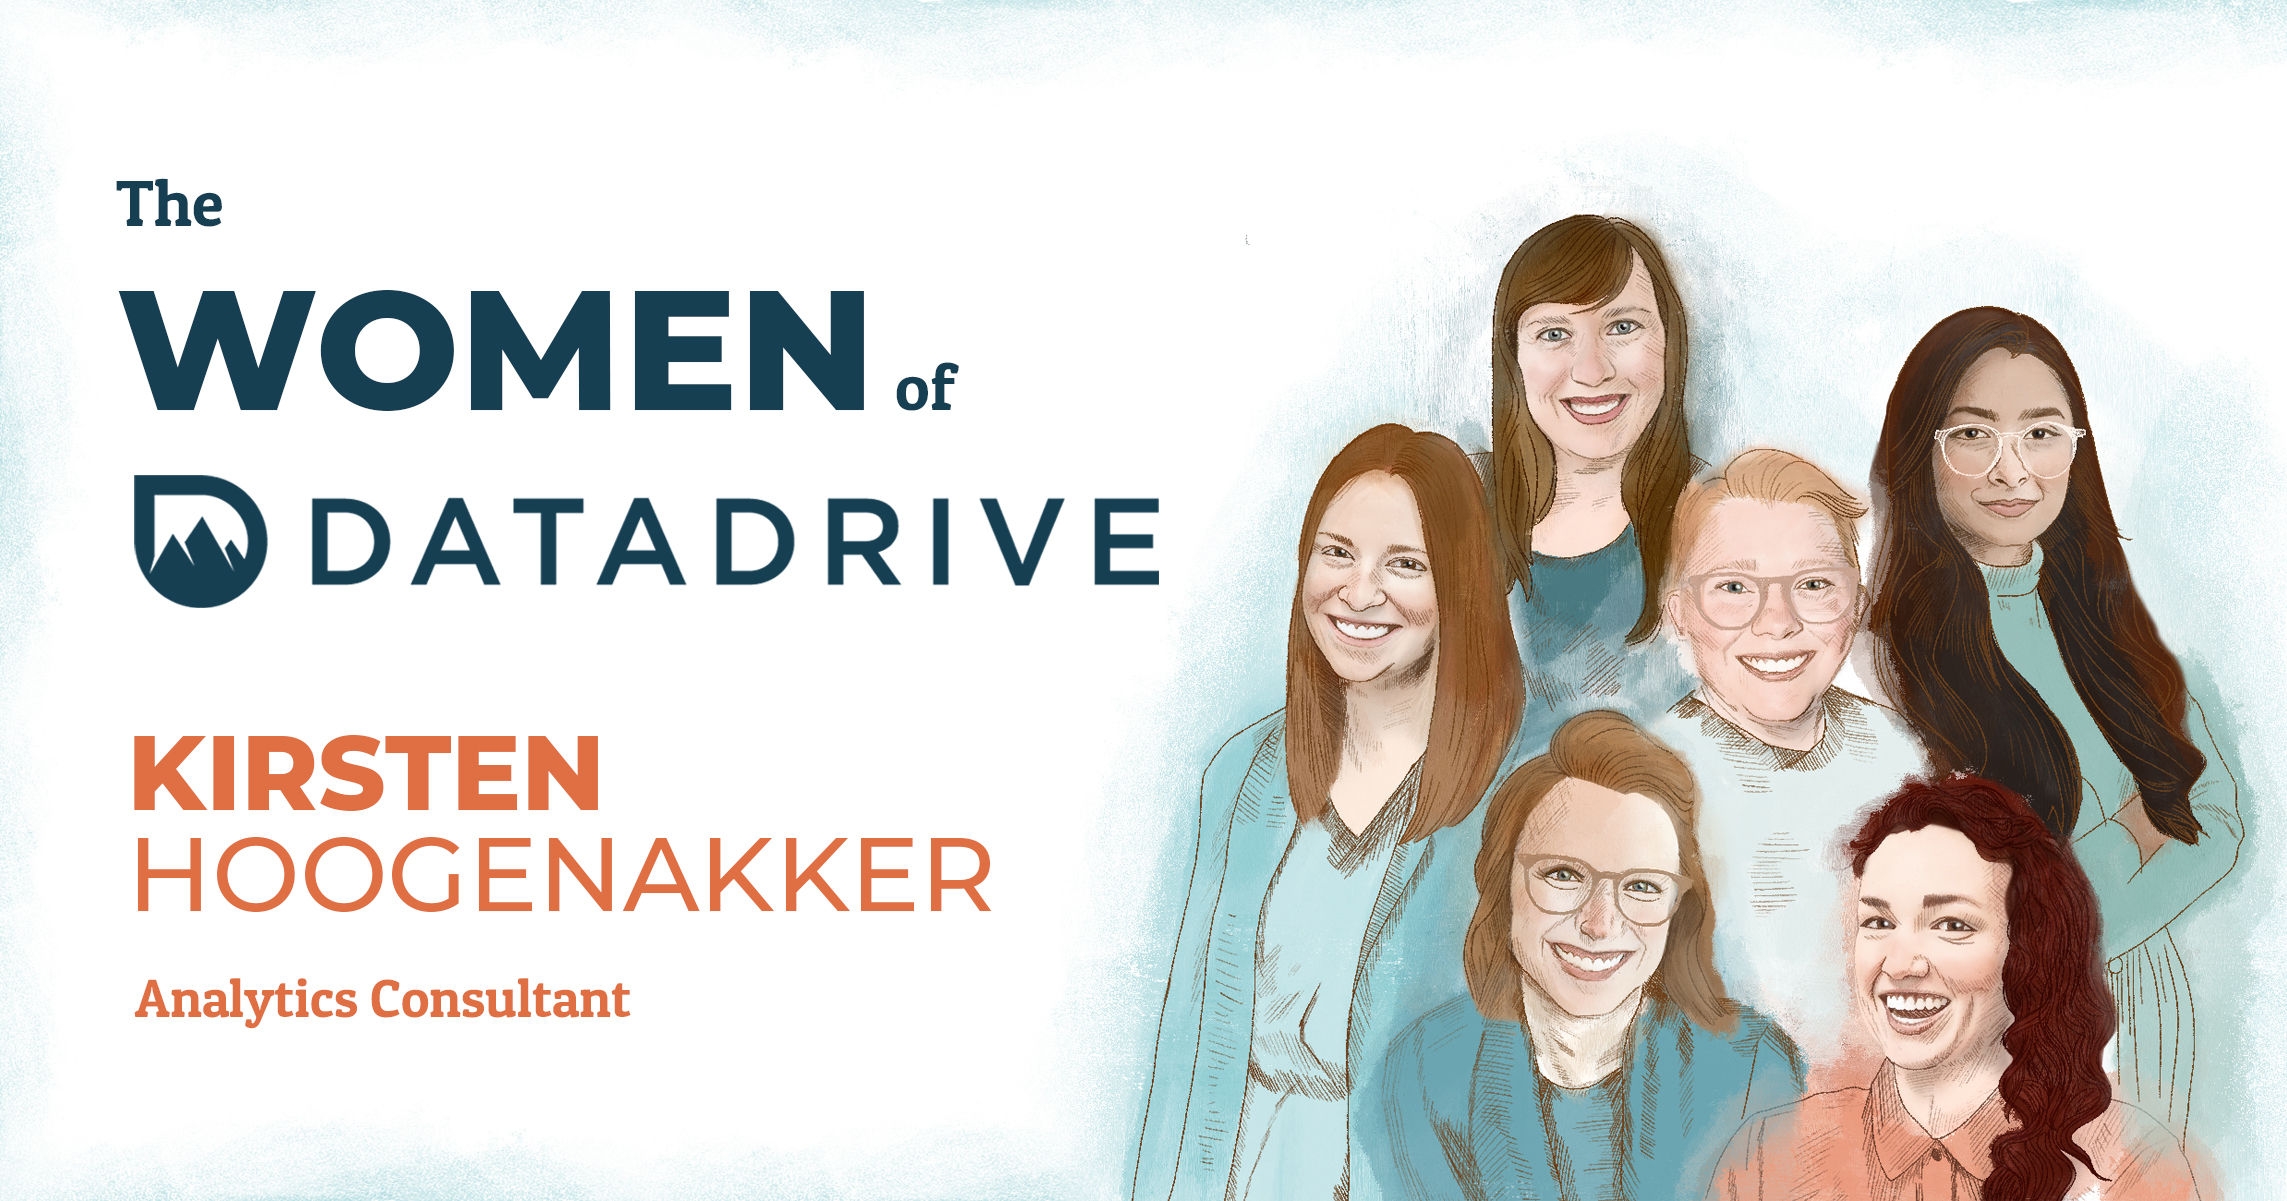 The Women of DataDrive - Kirsten Hoogenakker